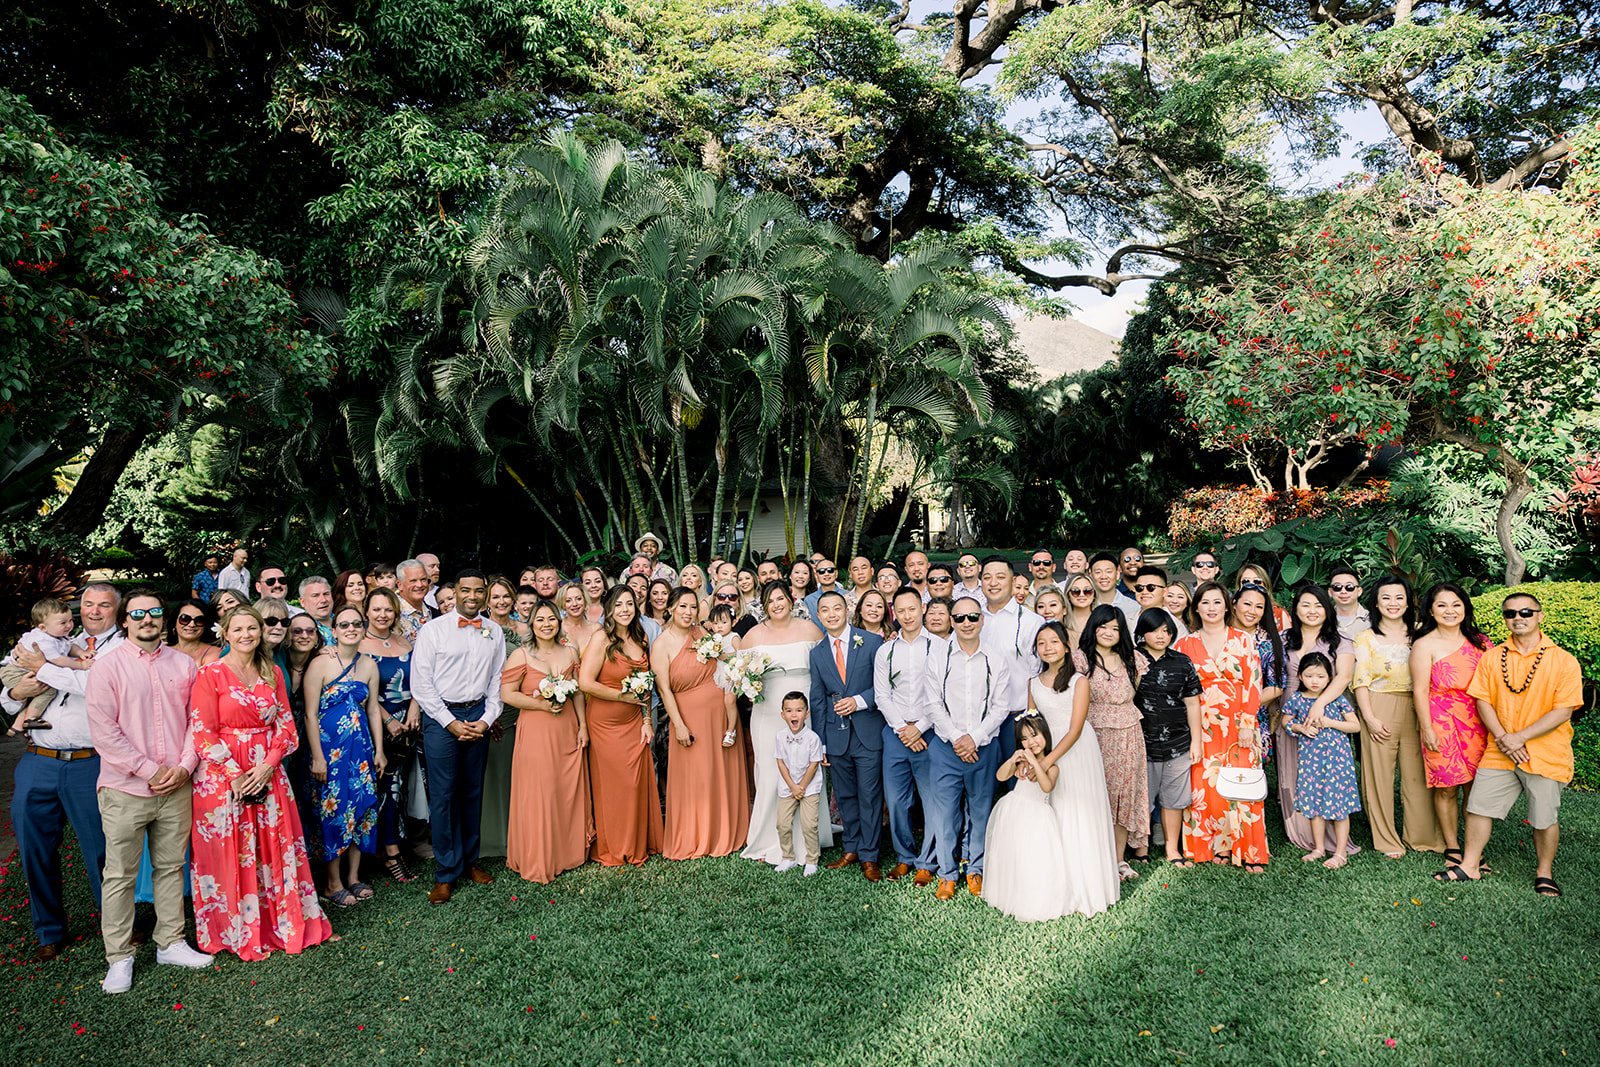  Maui Wedding Photographer 